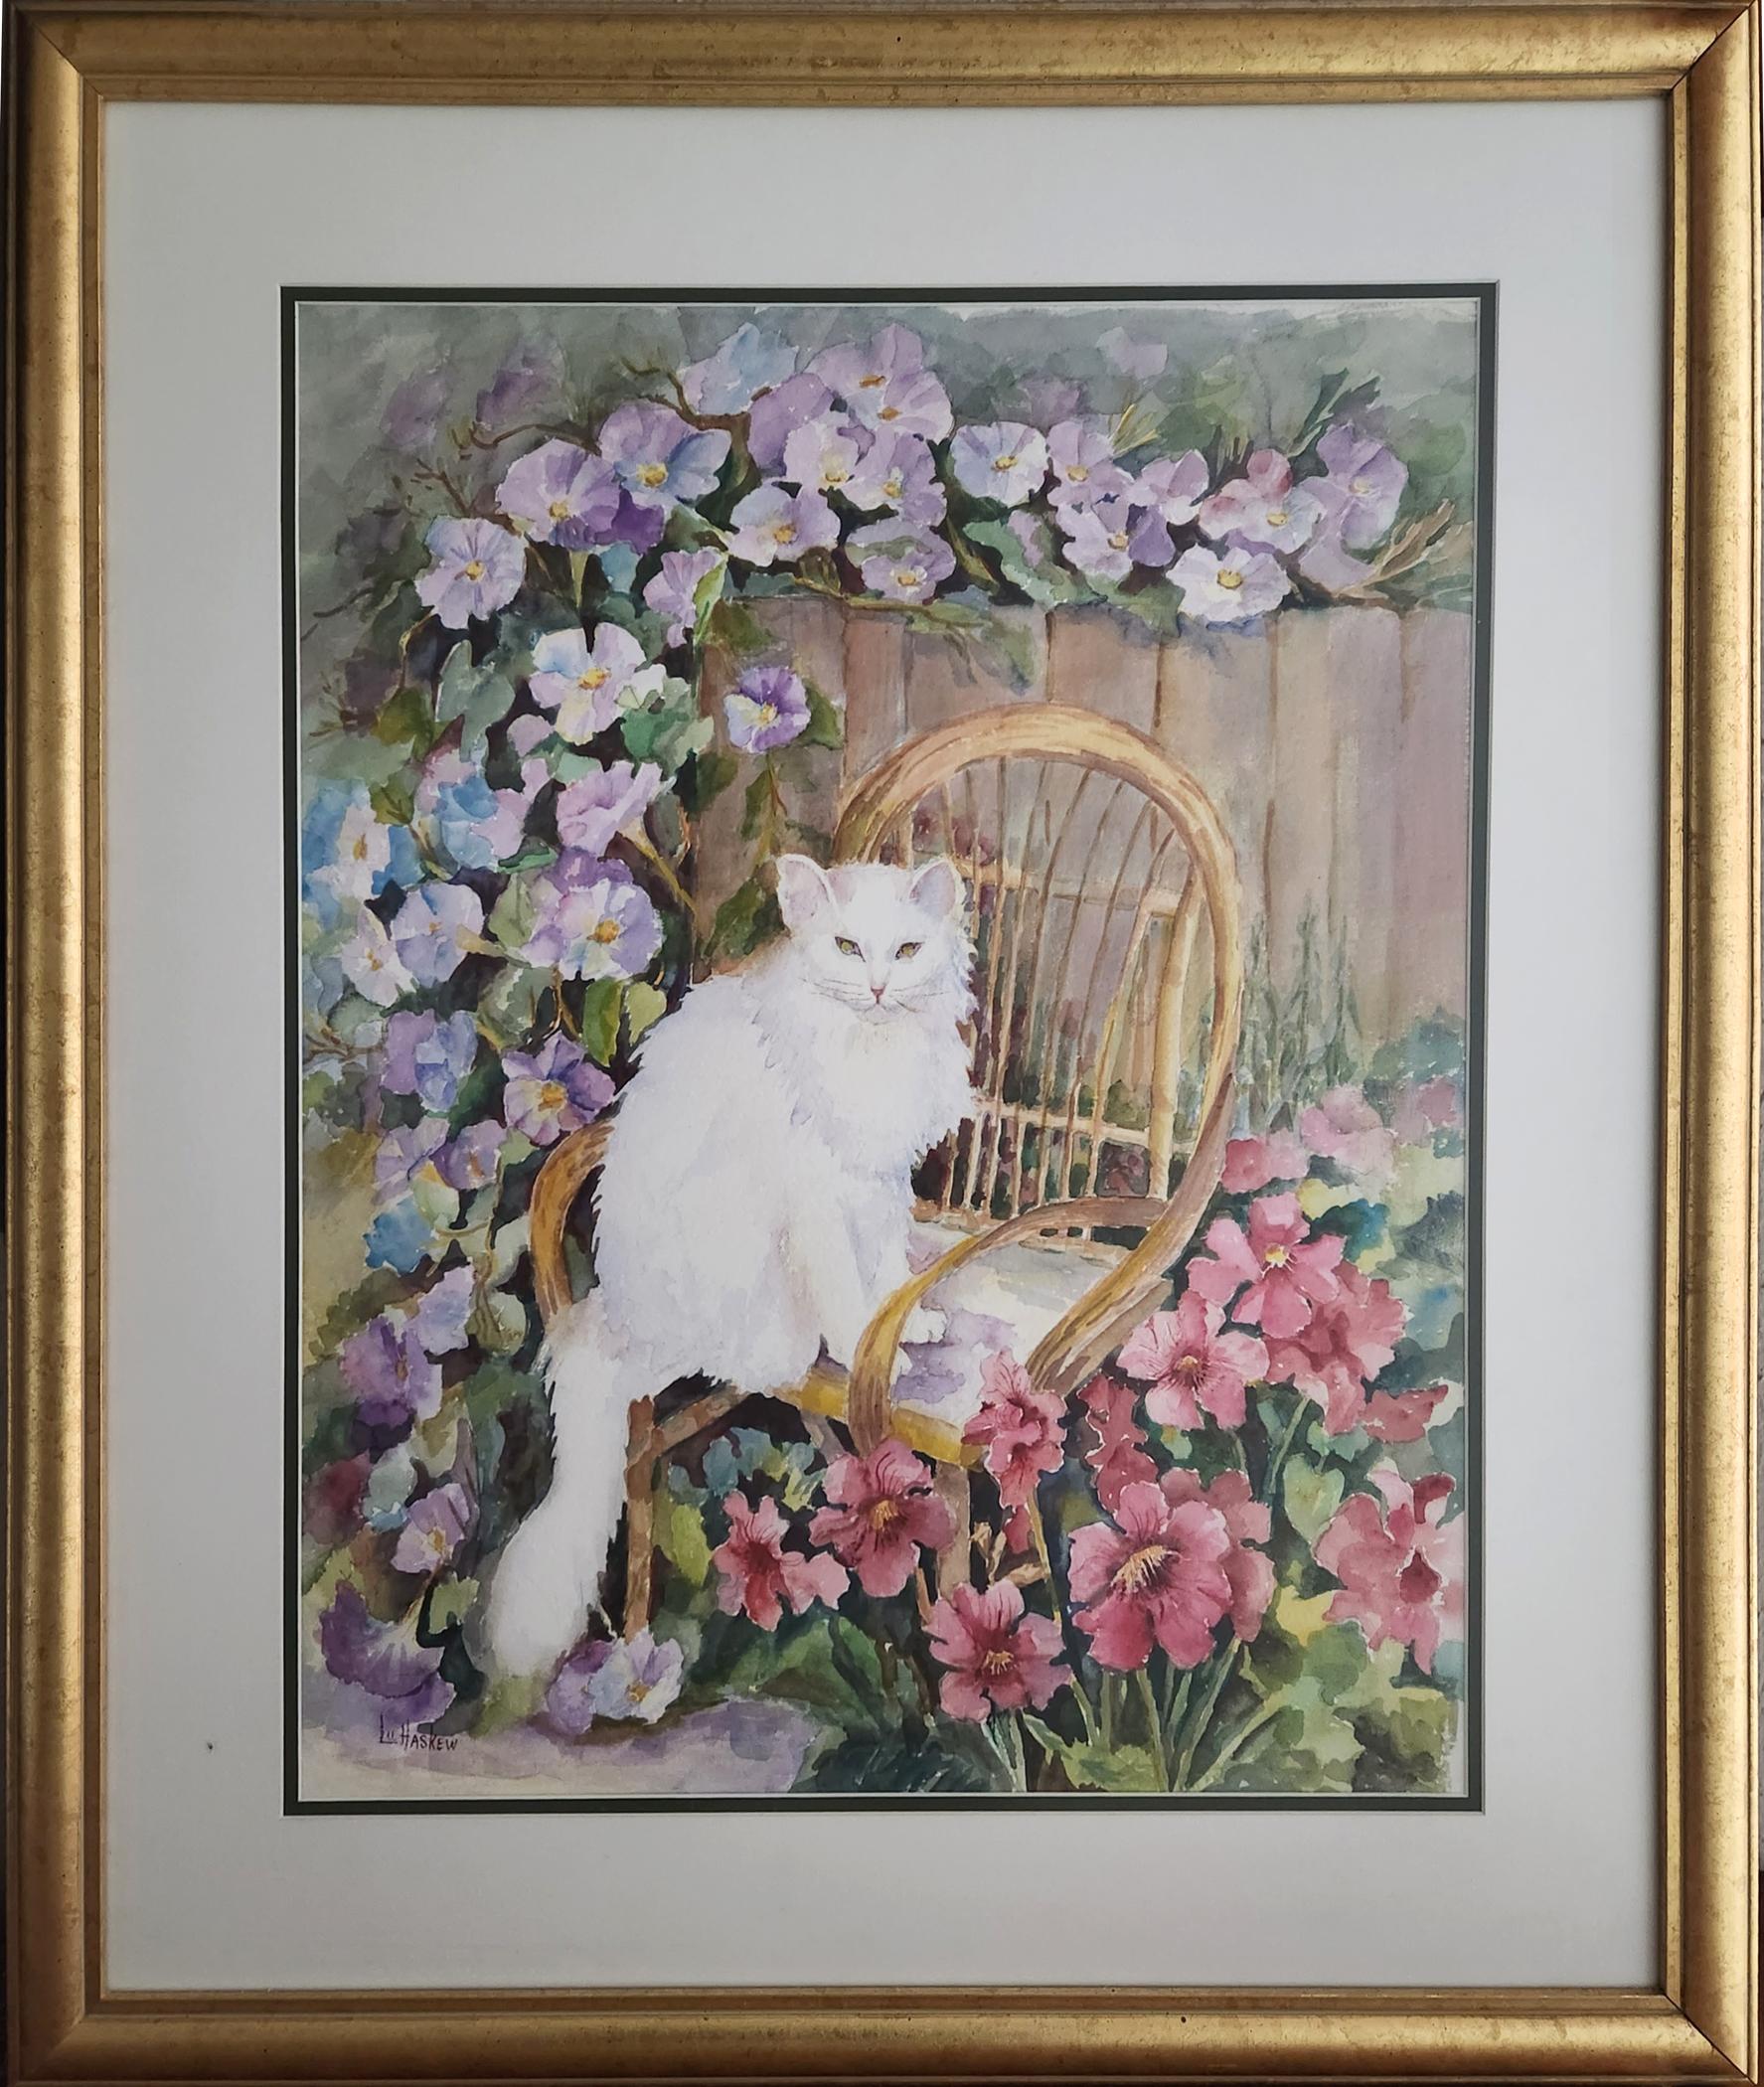 Lu Haskew Animal Painting - White Cat & Morning Glories, 23x18" watercolor